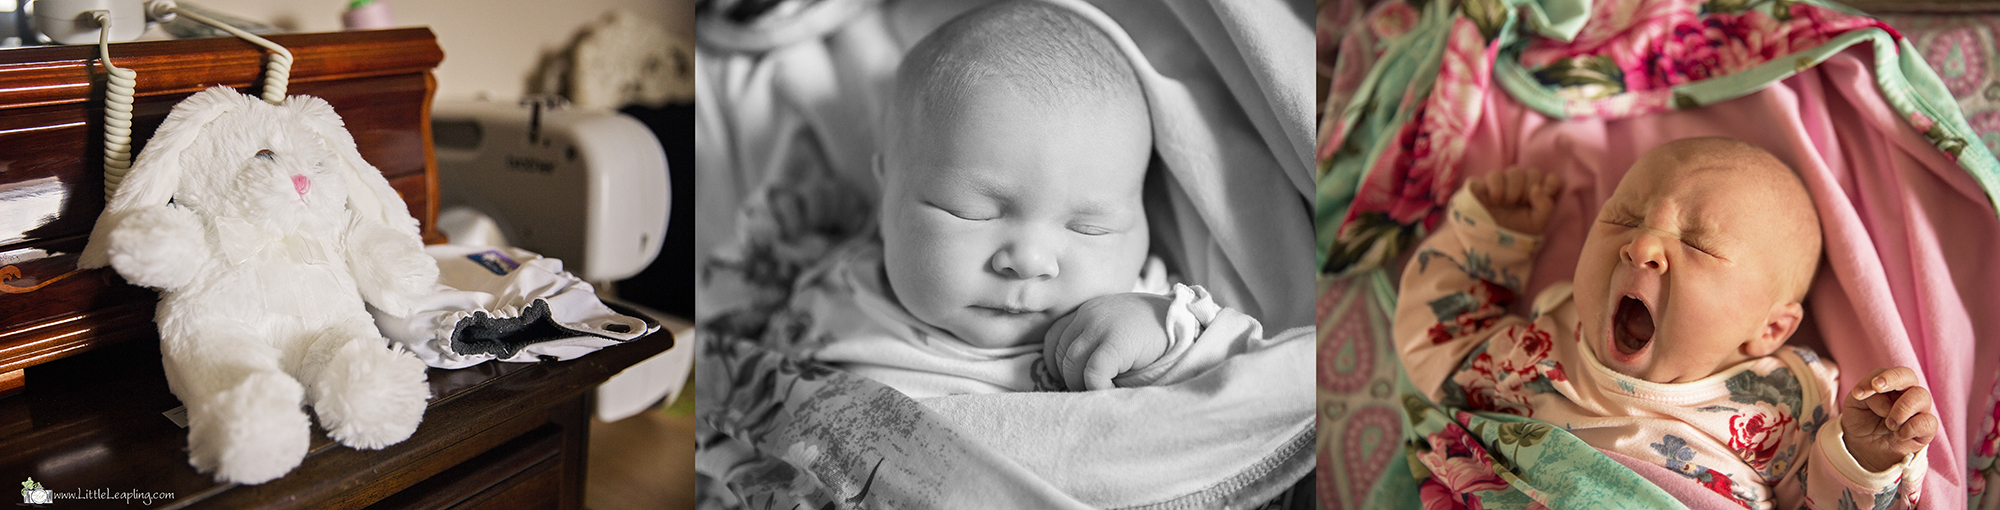 newborn photography inspiration